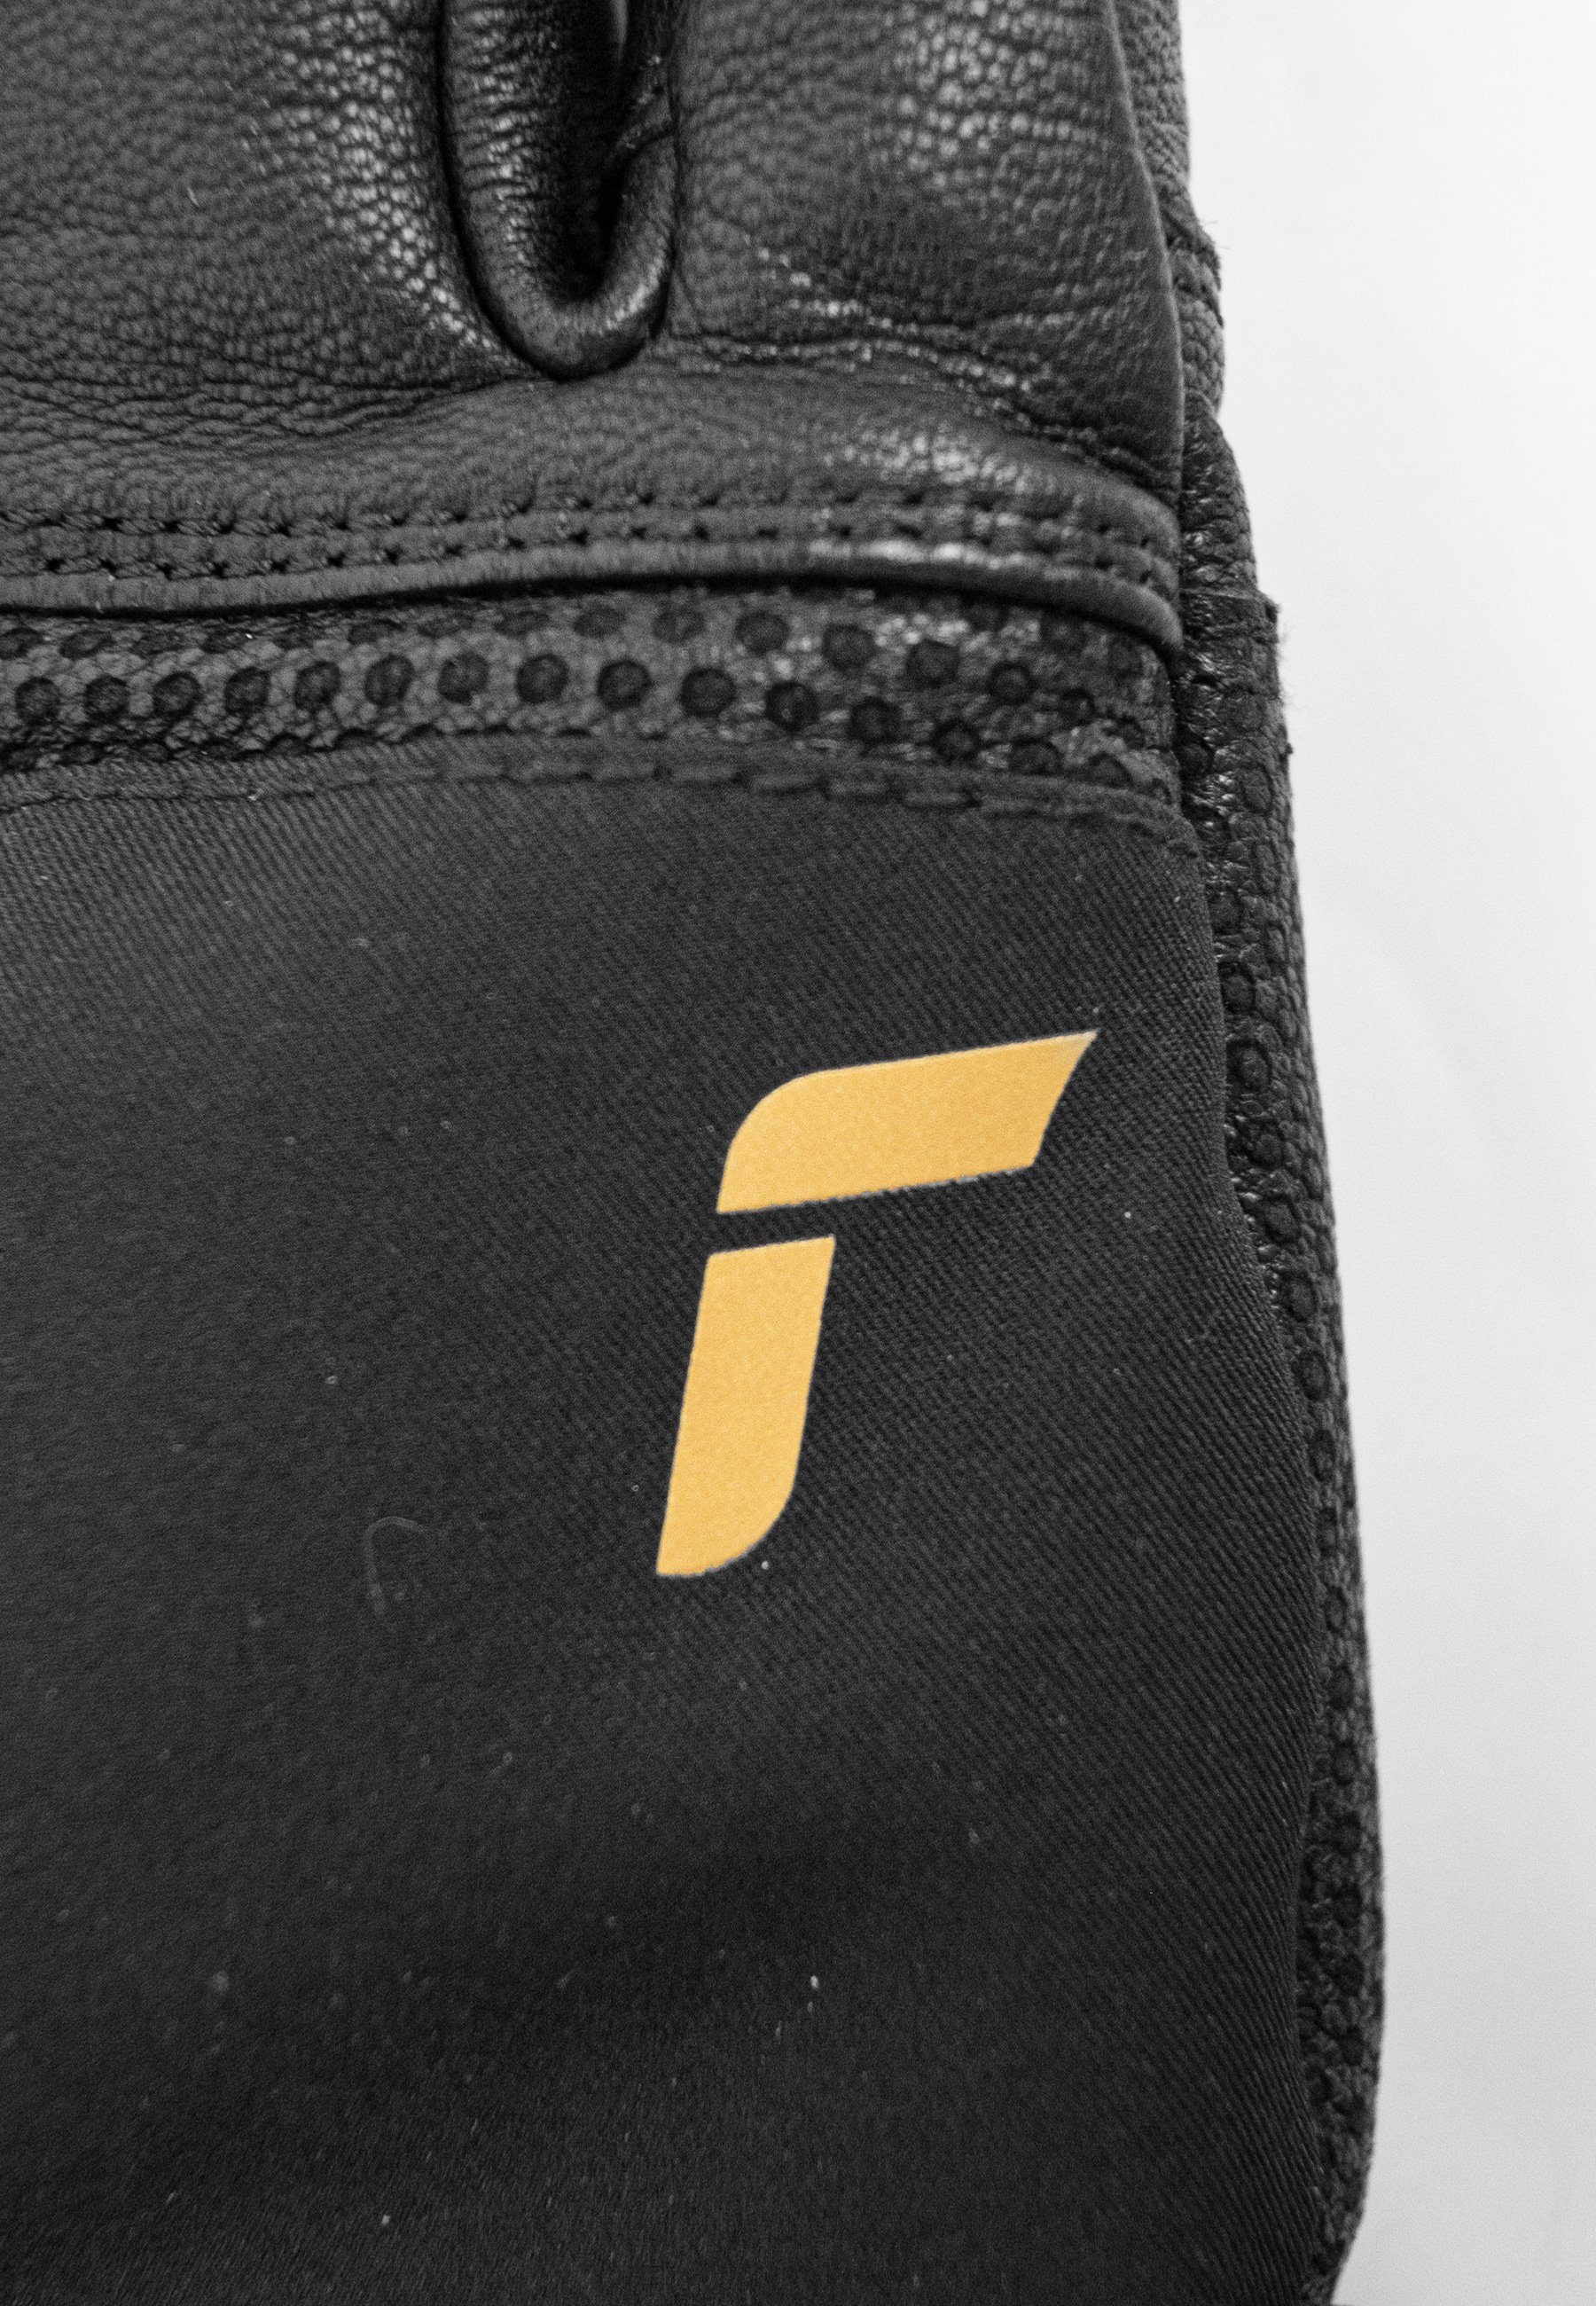 schwarz-goldfarben Skihandschuhe XT mit Lleon R-TEX® Touchscreen-Funktion Reusch